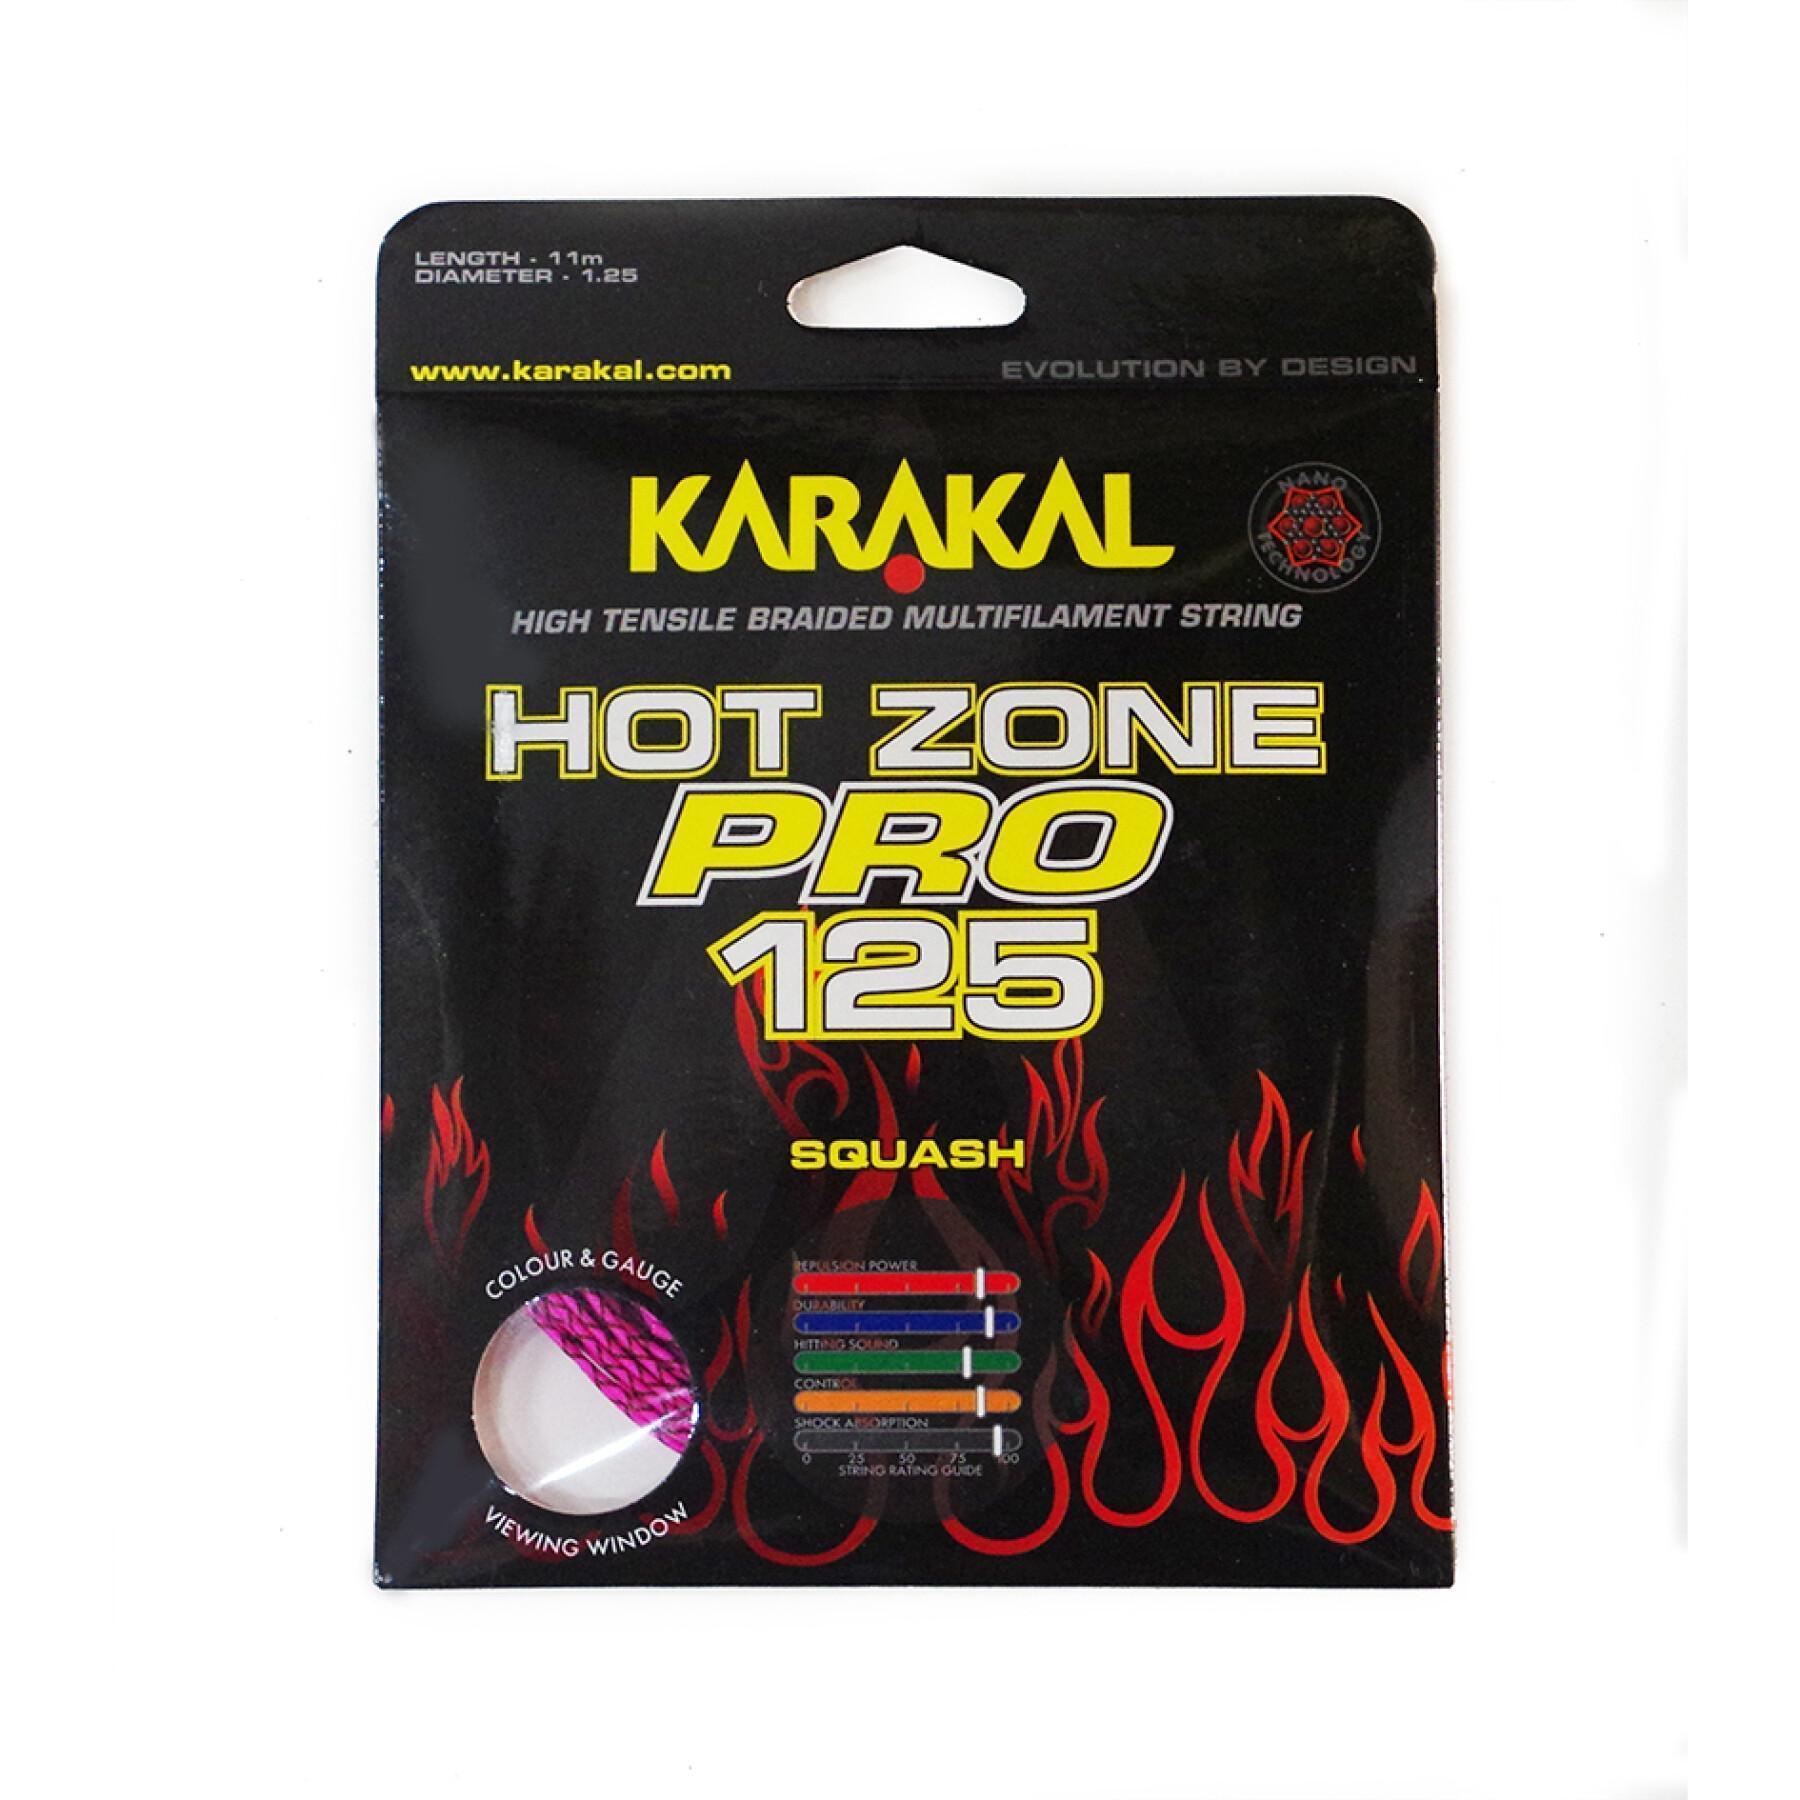 Squash strings Karakal Hot Zone Pro 125